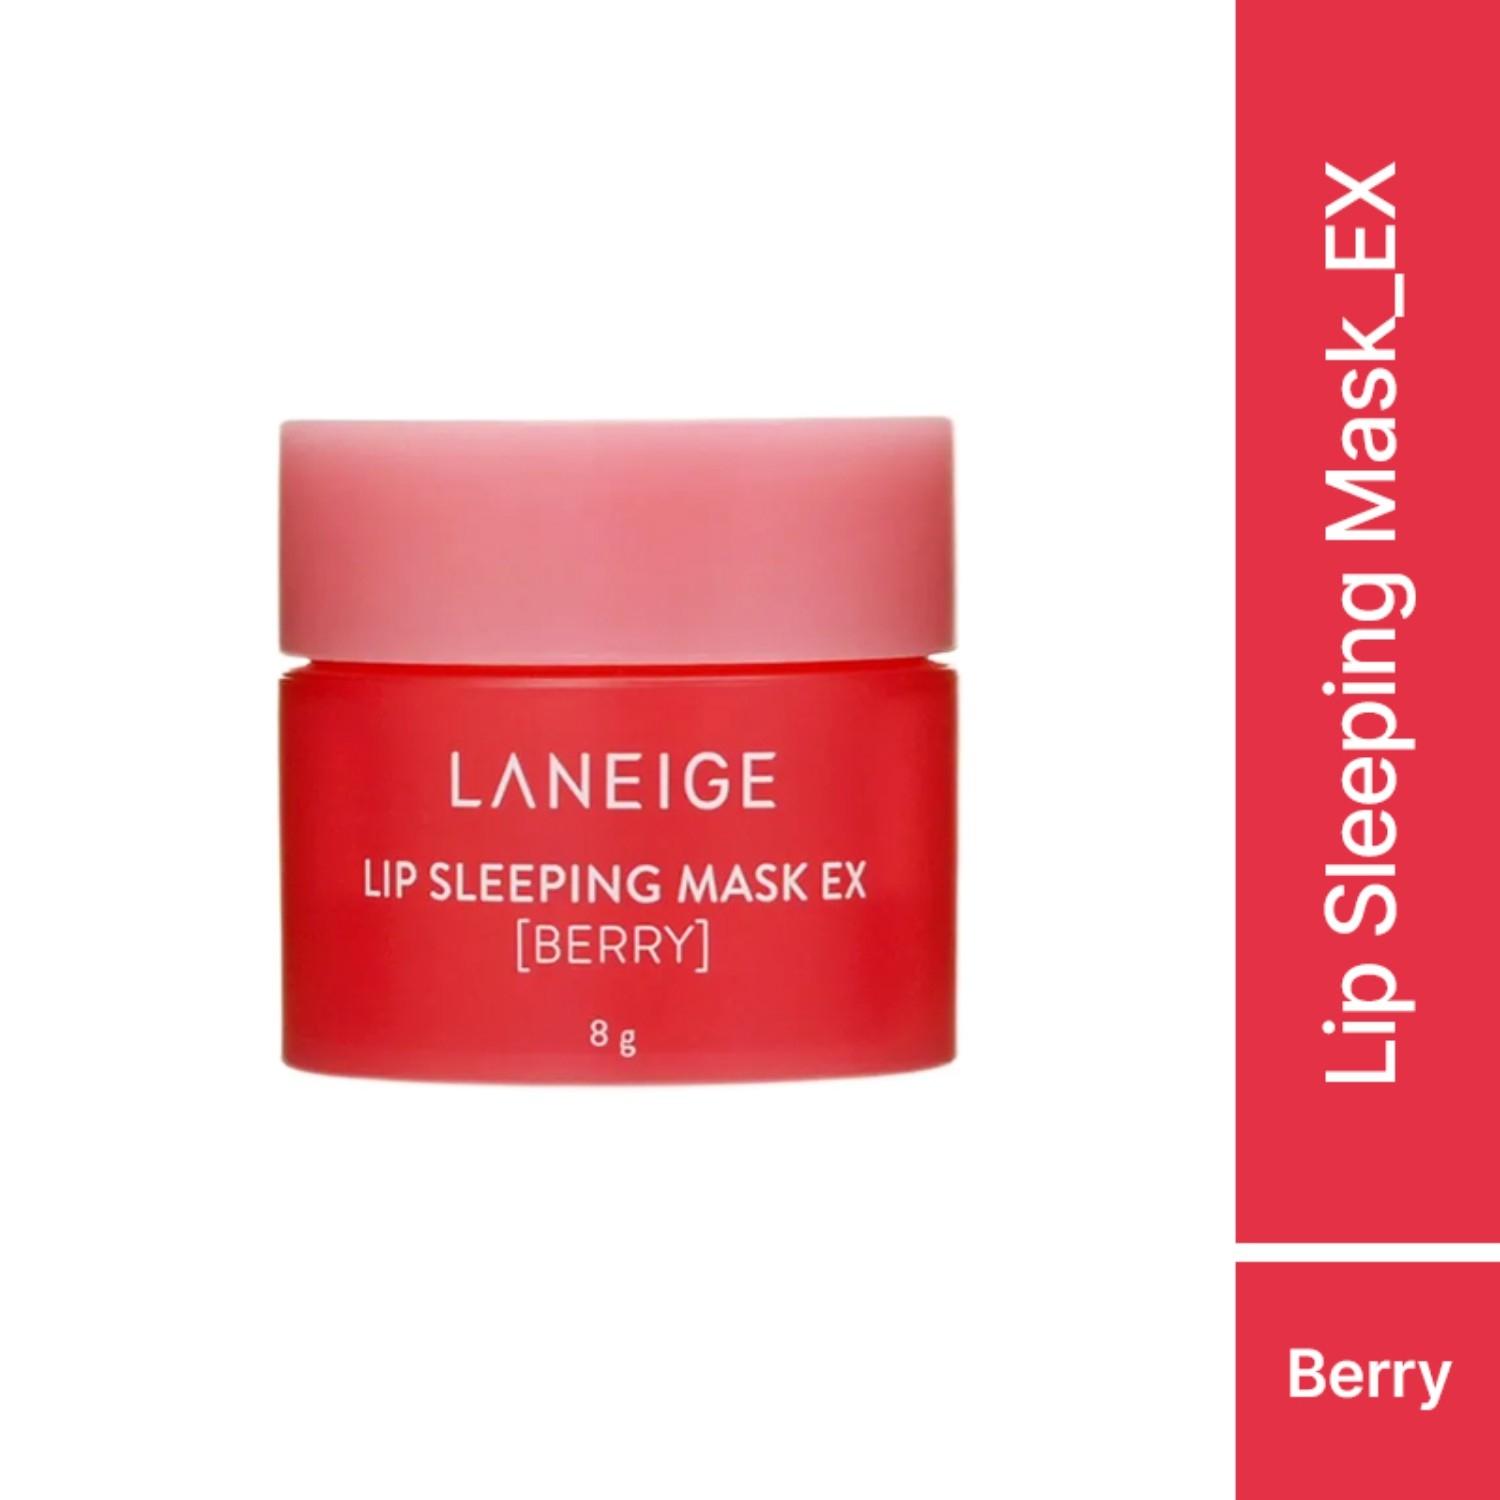 laneige berry lip sleeping mask ex (8g)